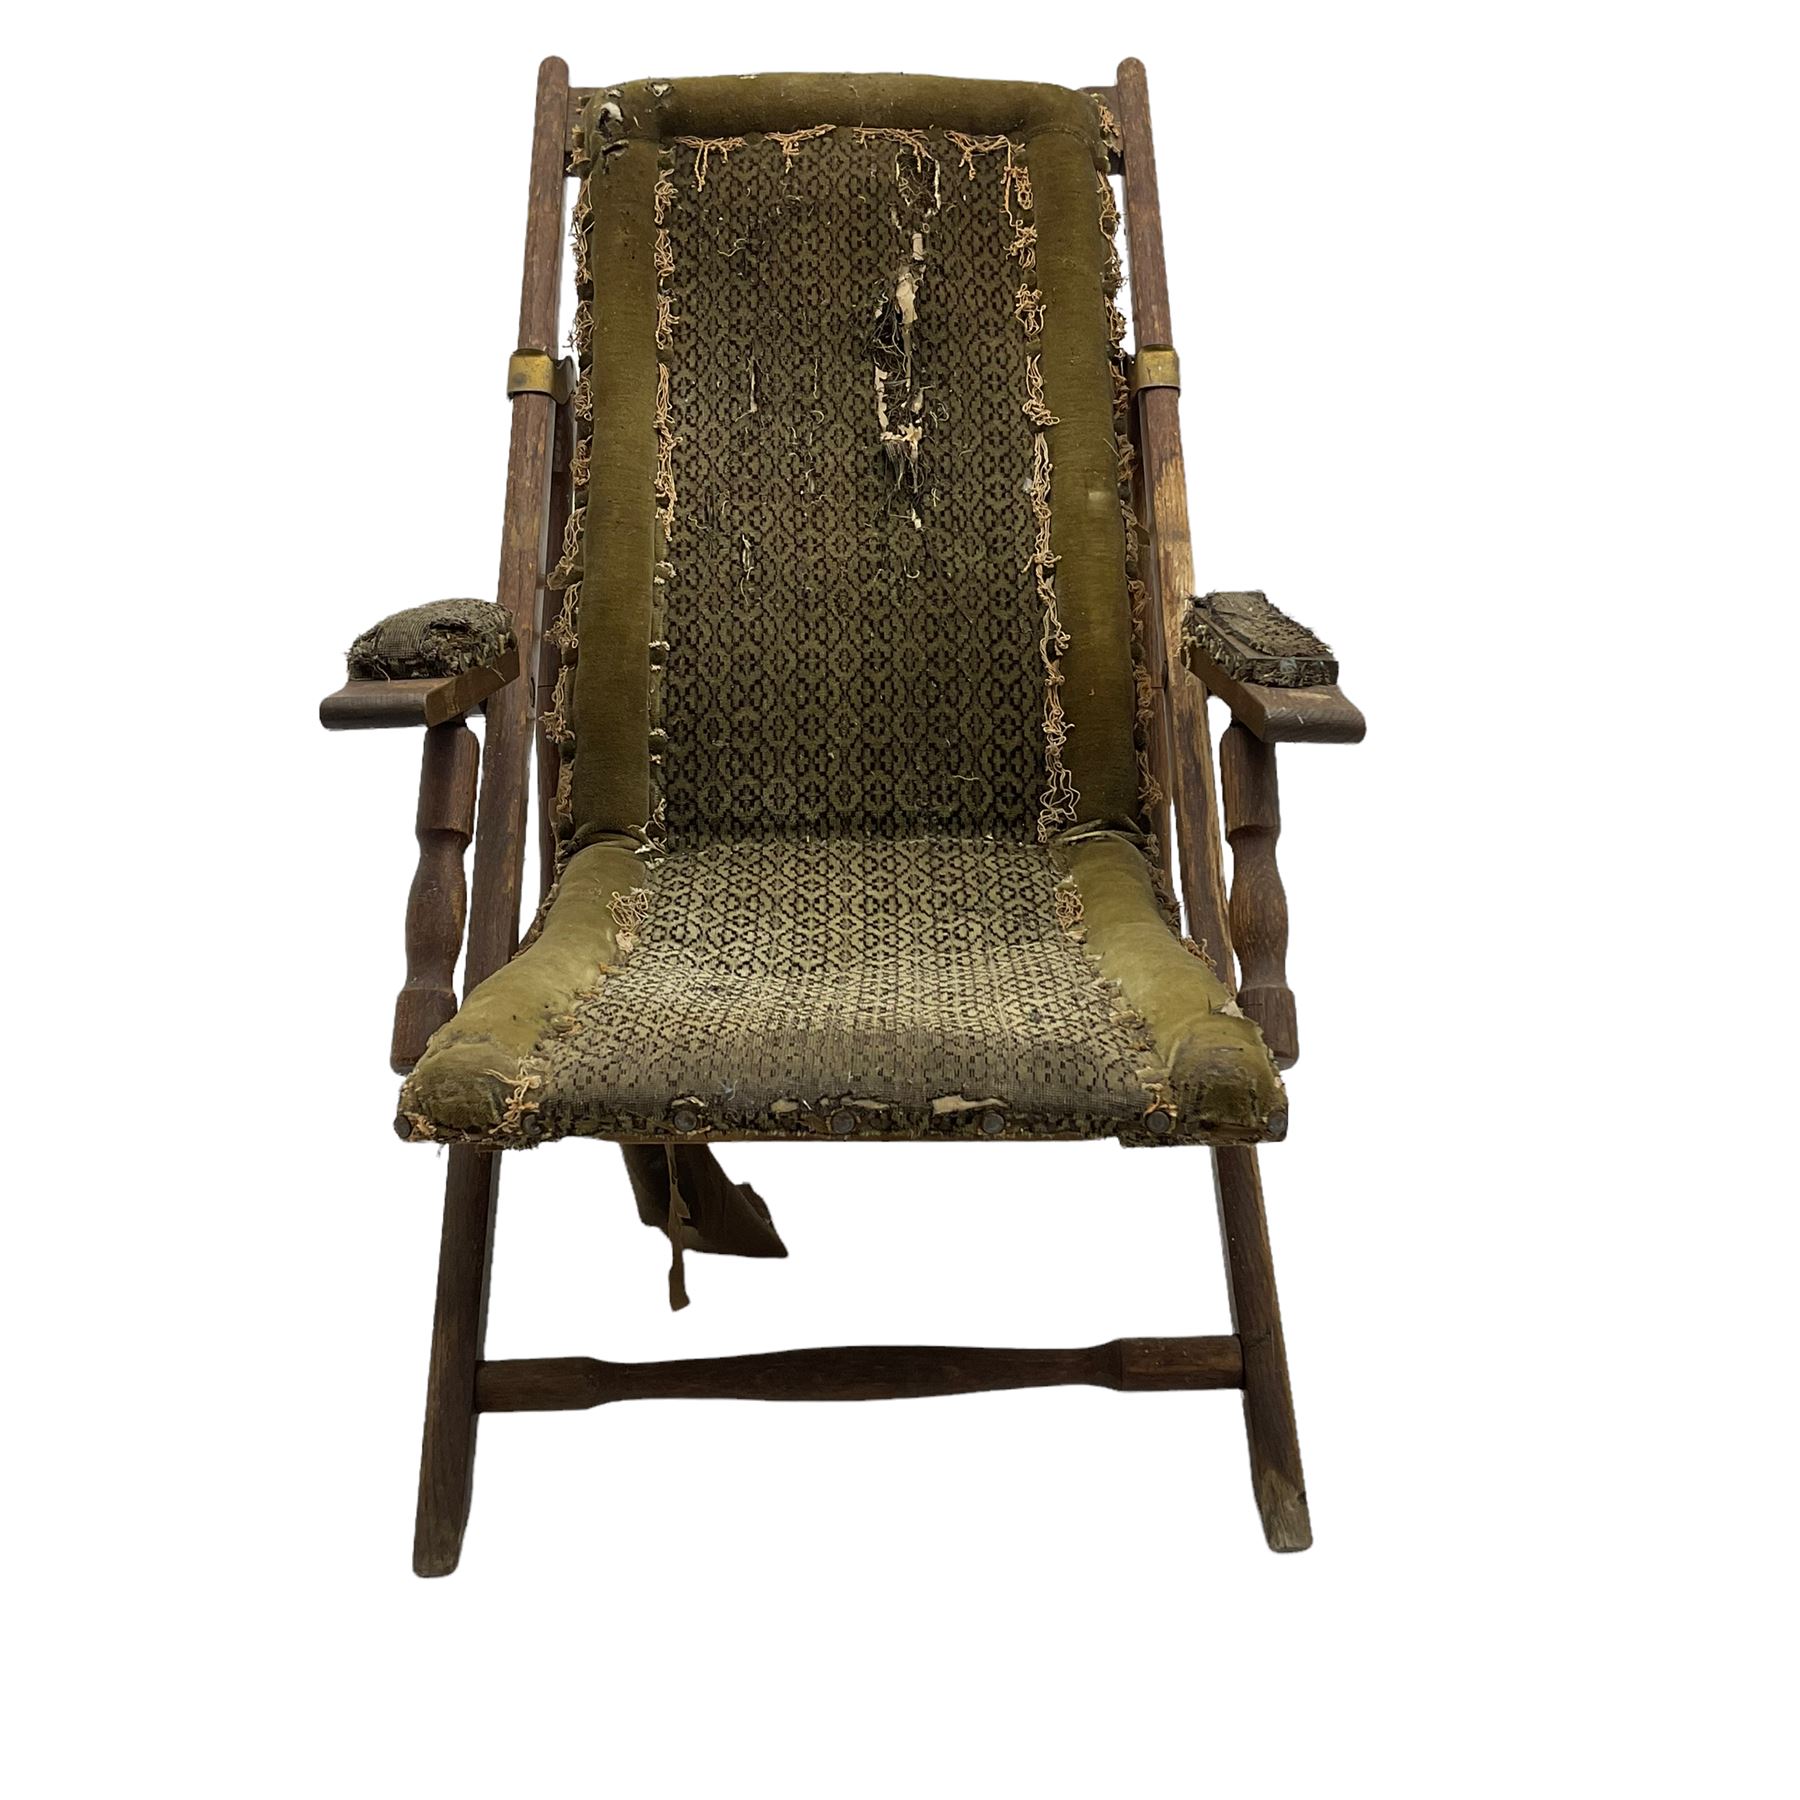 19th century oak campaign steamer or garden chair